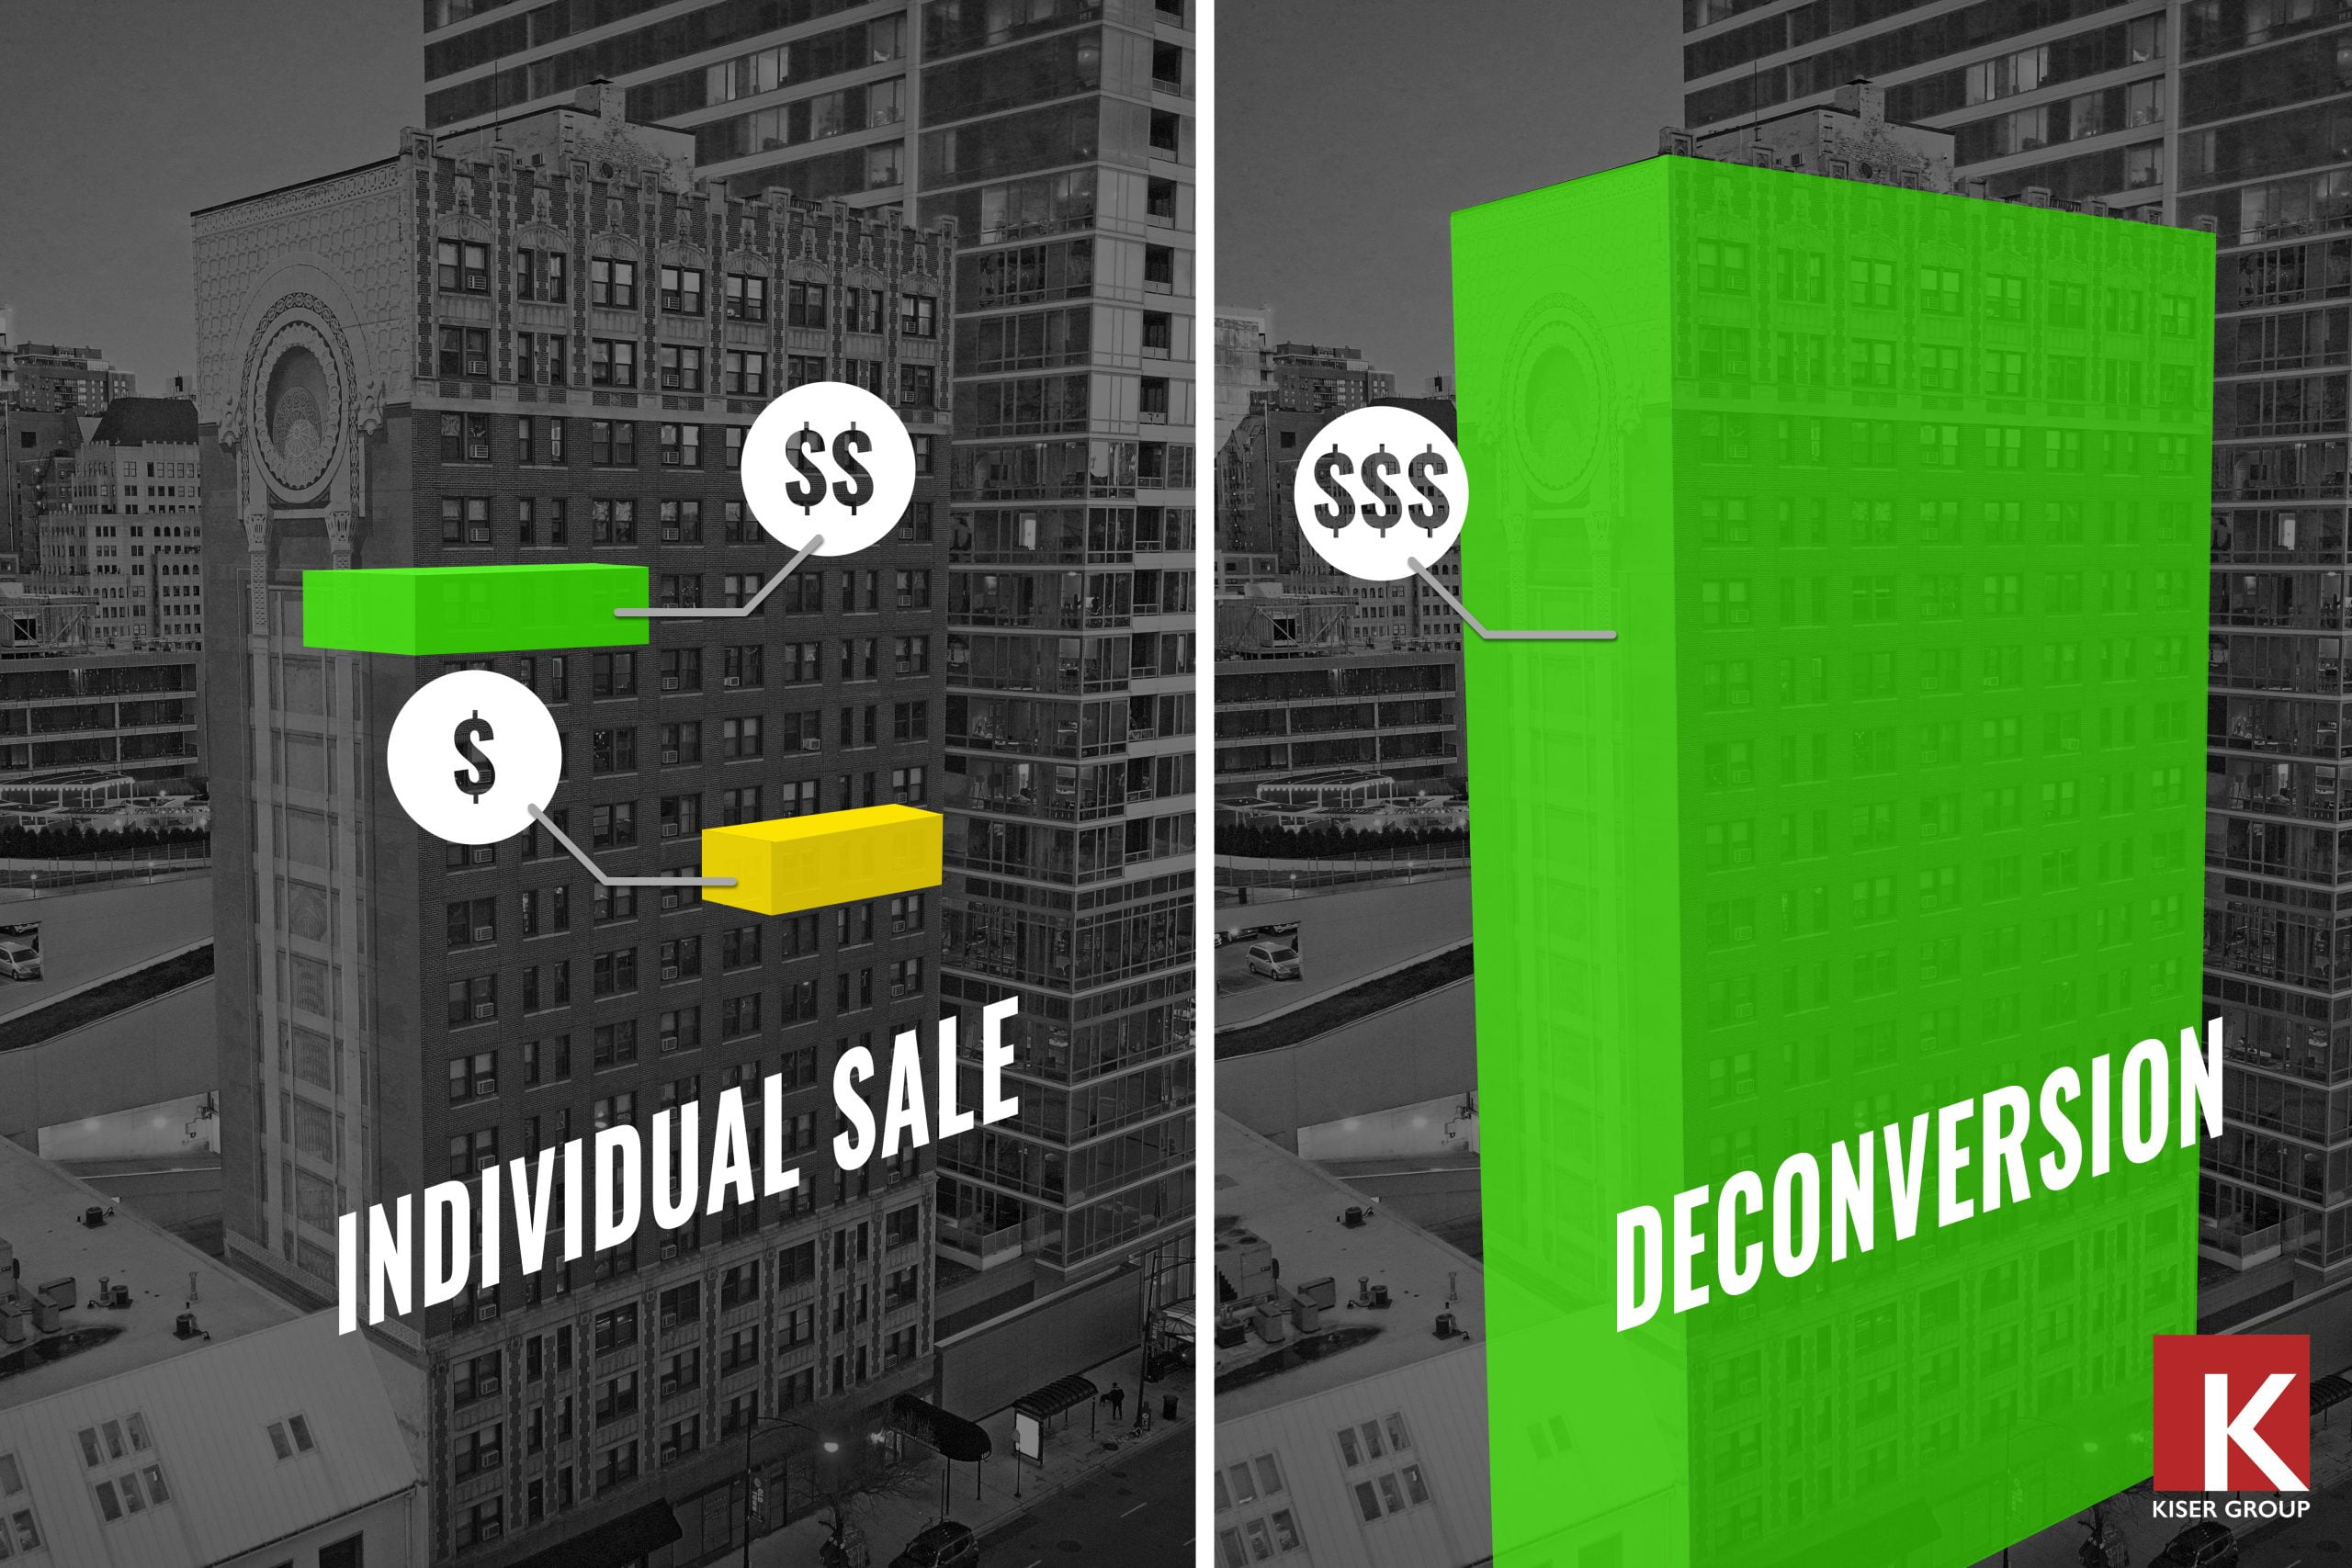 Individual Unit Sales versus Condo Deconversion